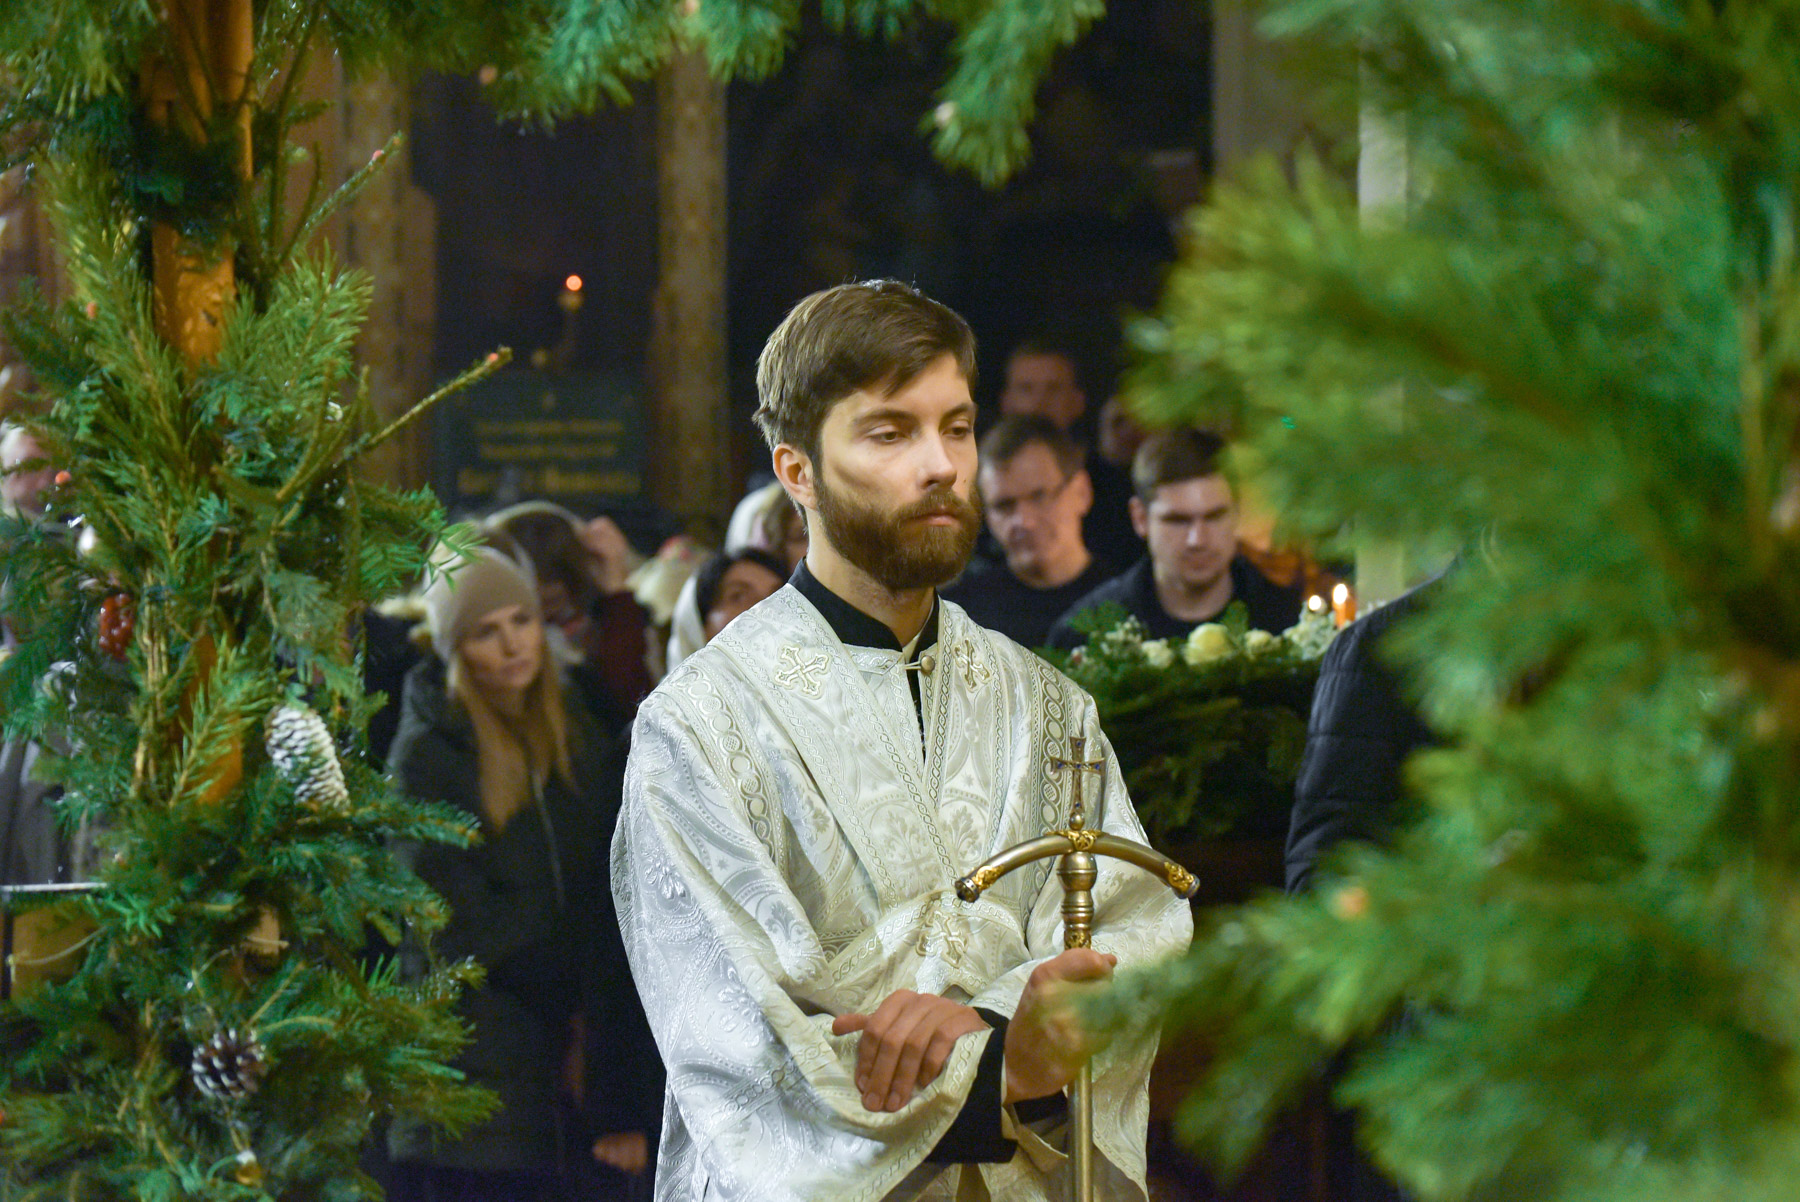 photos of orthodox christmas 0248